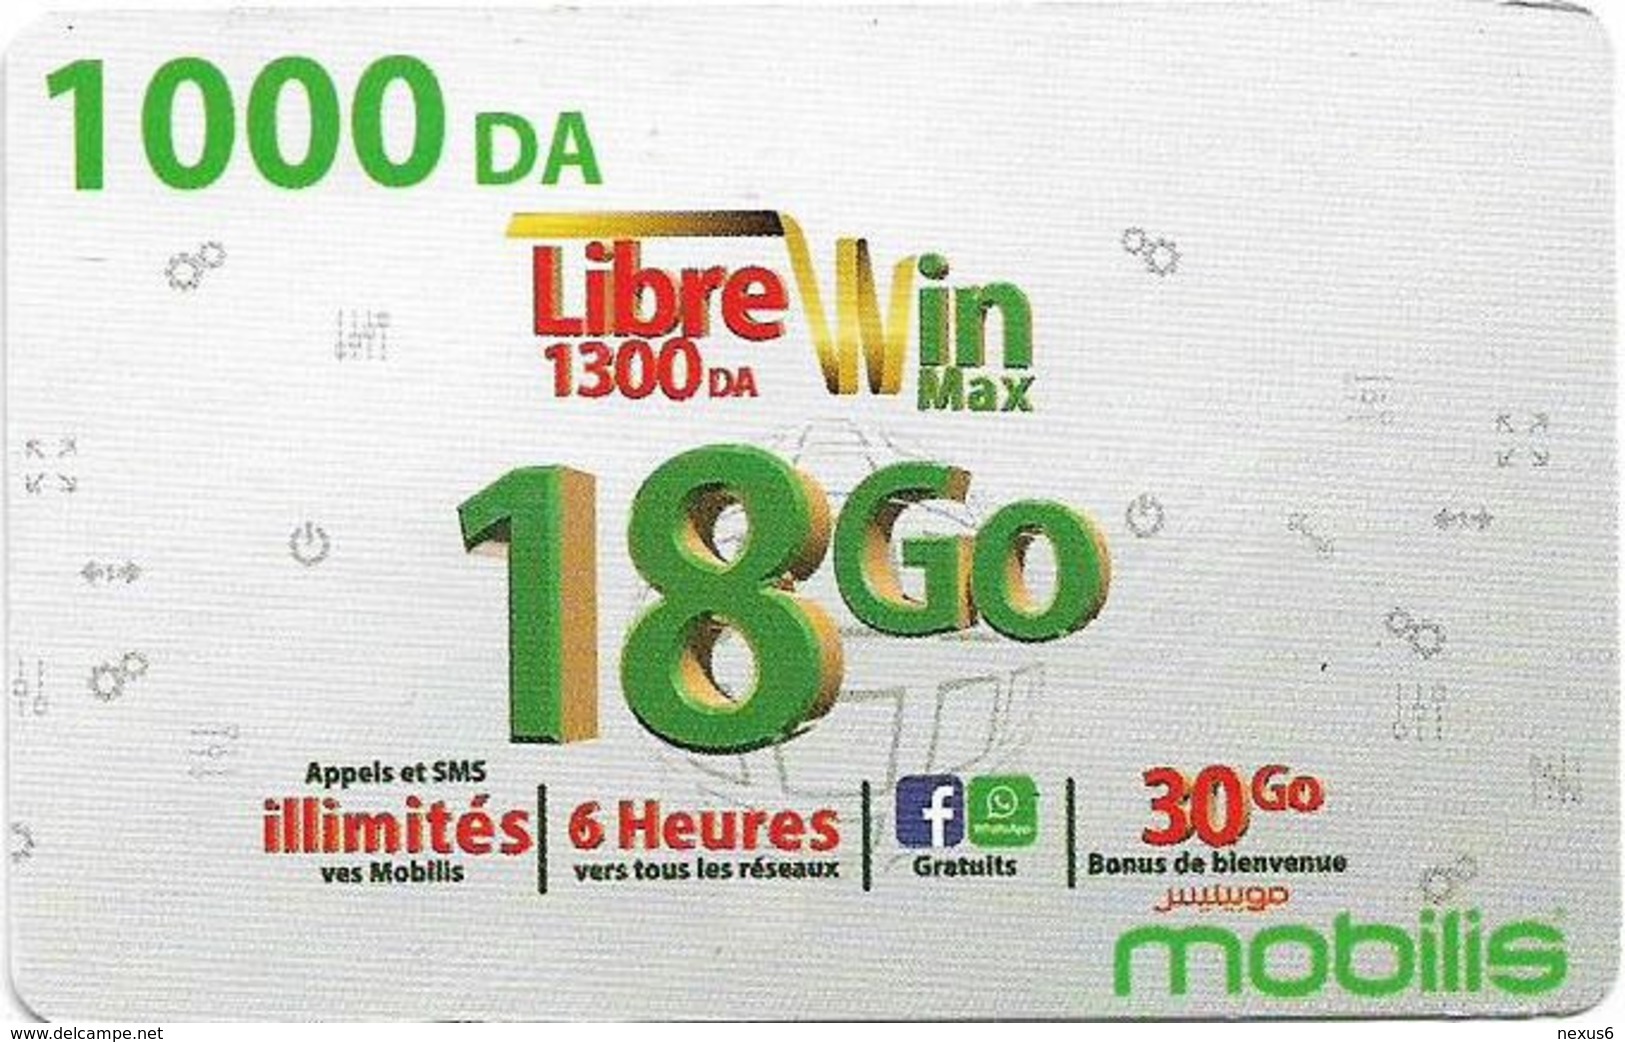 Algeria - Mobilis - Libre Win Max 18 Go, Exp.06.02.2019, GSM Refill 1.000DA, Used - Algeria